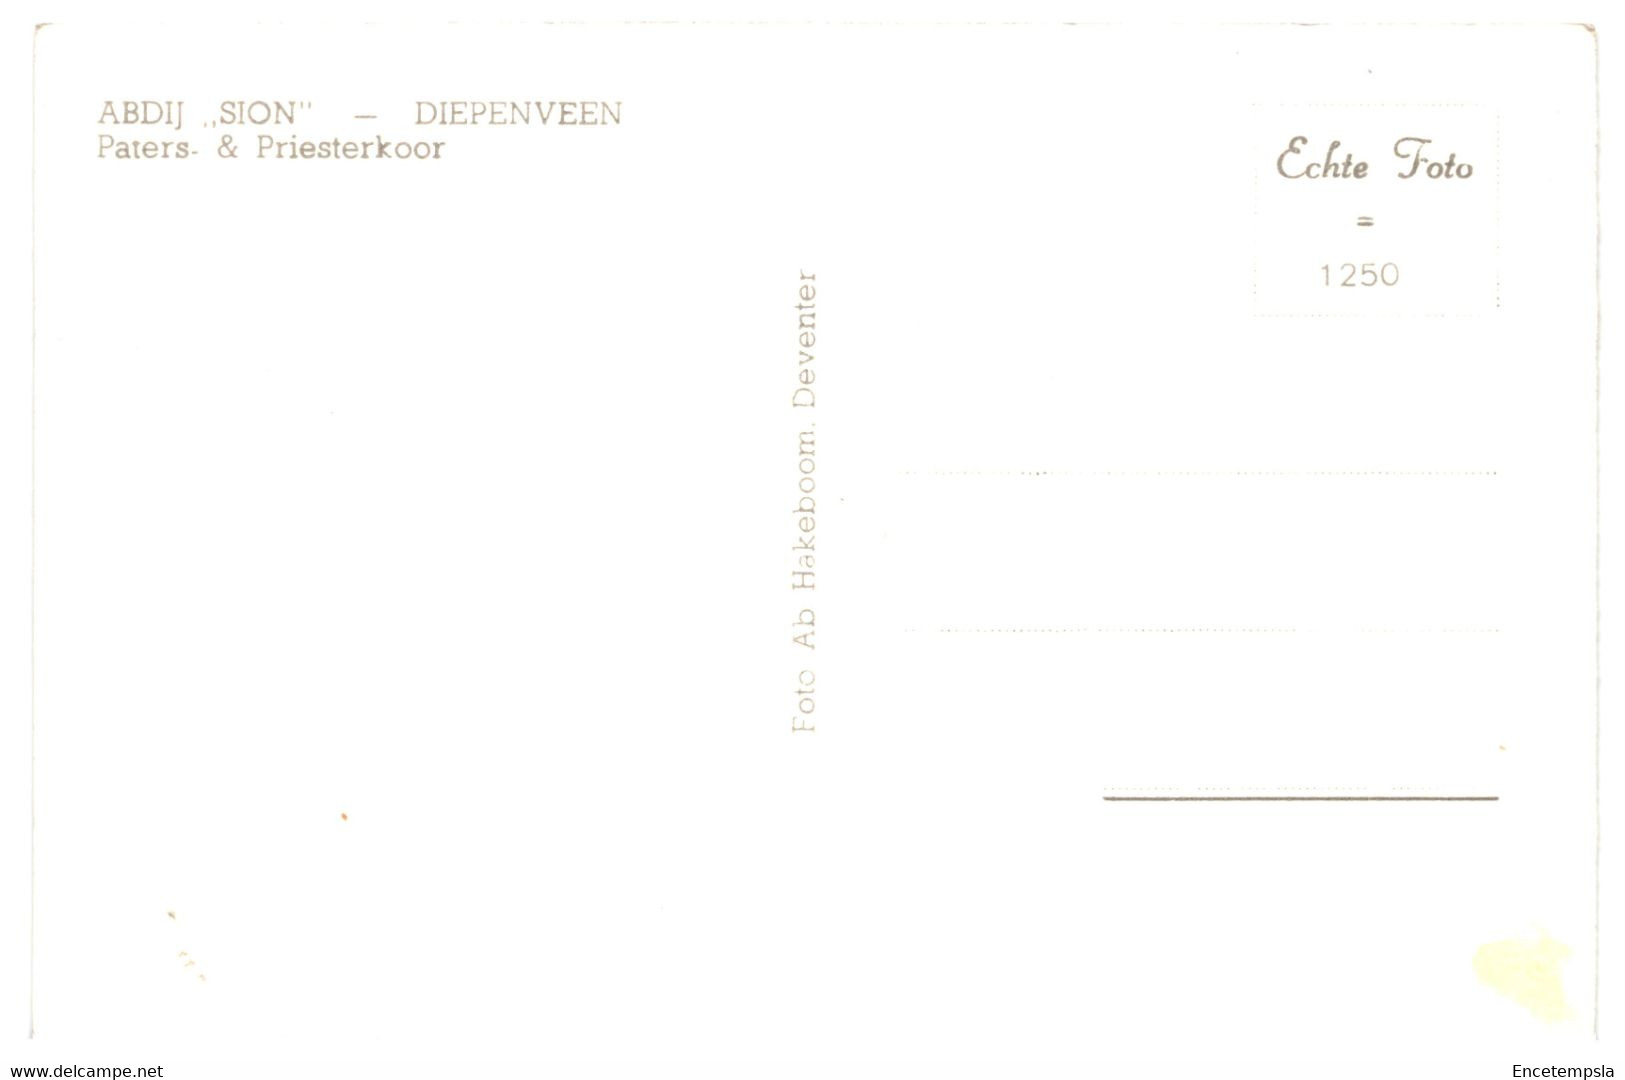 CPA - Cartes postales - Lot de 50 cartes postales des Pays Bas VMHOL1